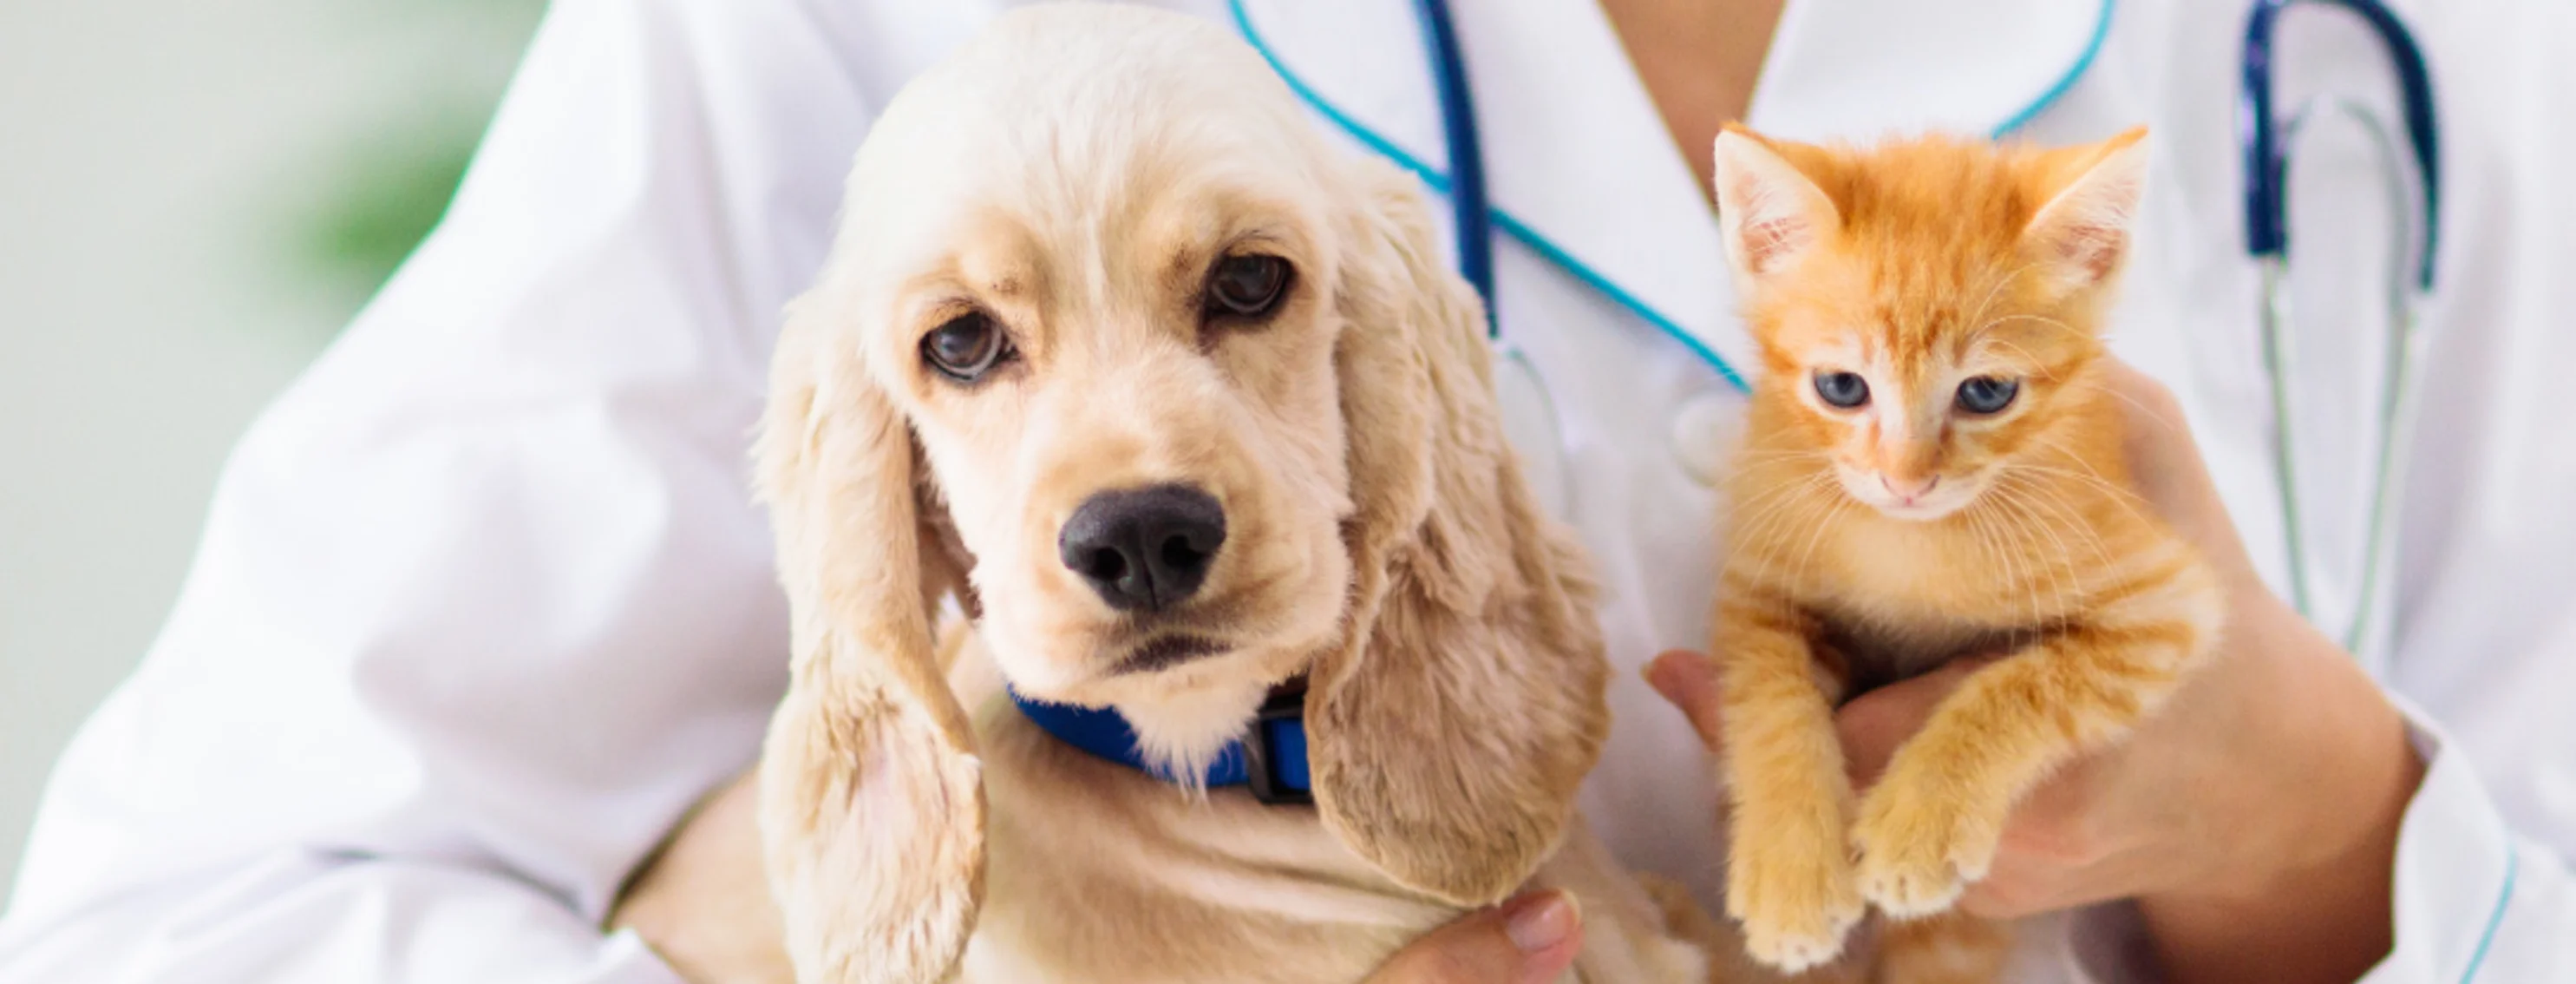 Puppy with Kitten in Doctors Hands